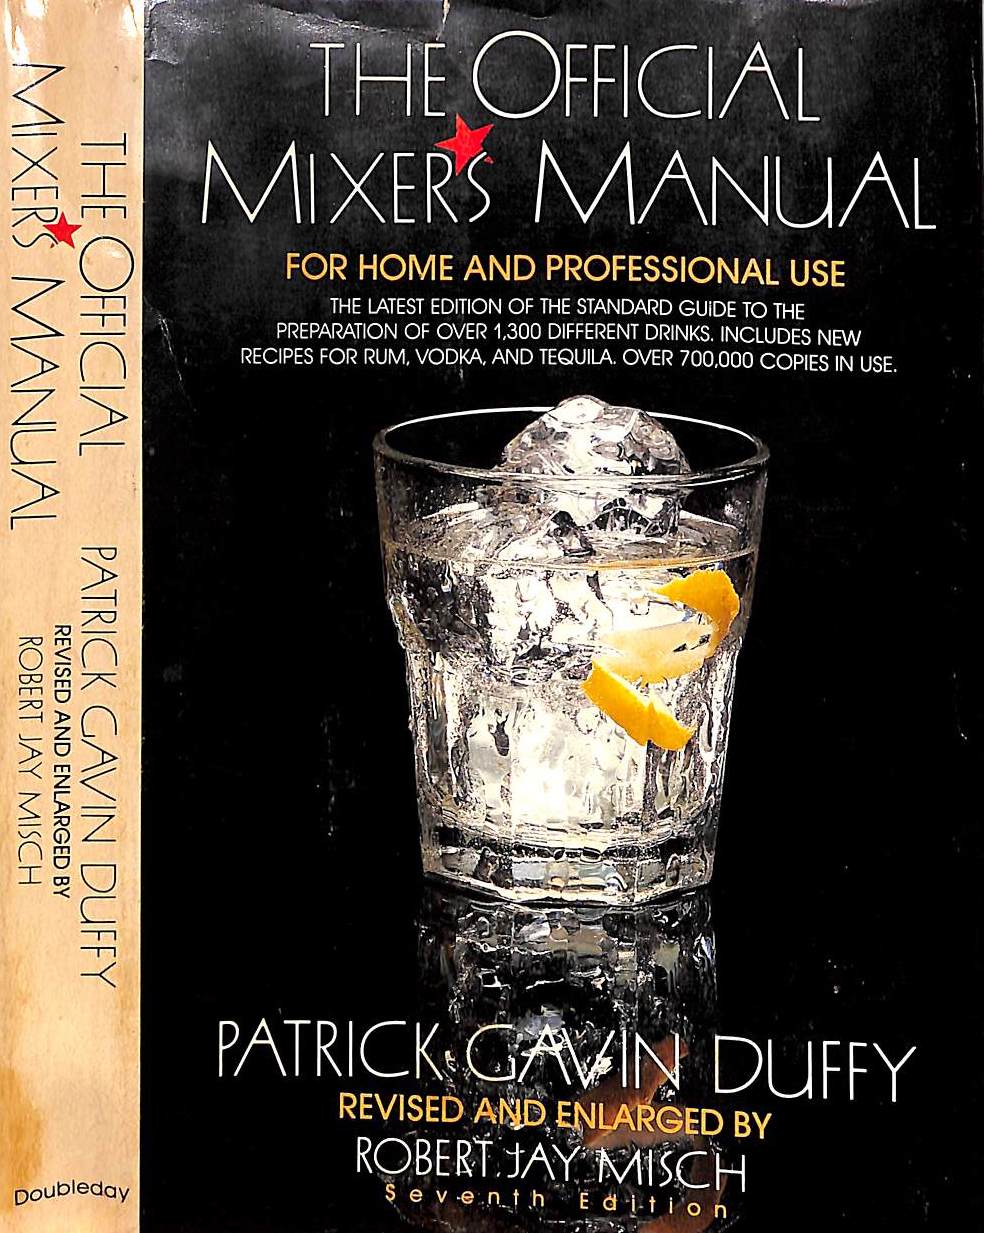 "The Official Mixer's Manual" 1983 DUFFY, Patrick Gavin